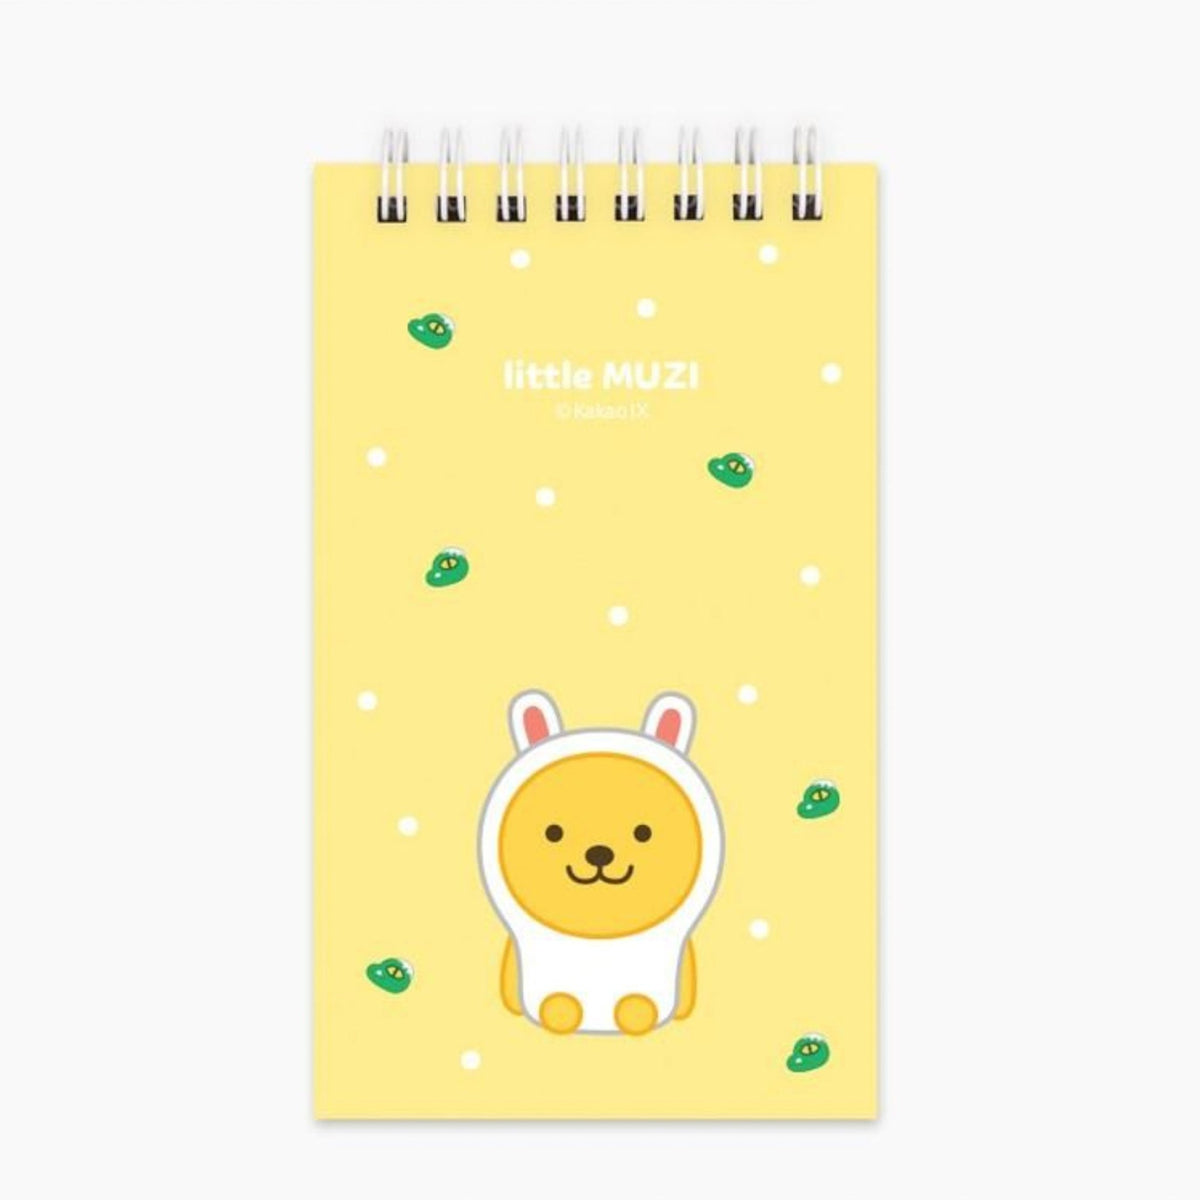 little FRIENDS Cute Mini Spiral Top Bound Spring Notebook Ruled Notepad - SkoopMarket